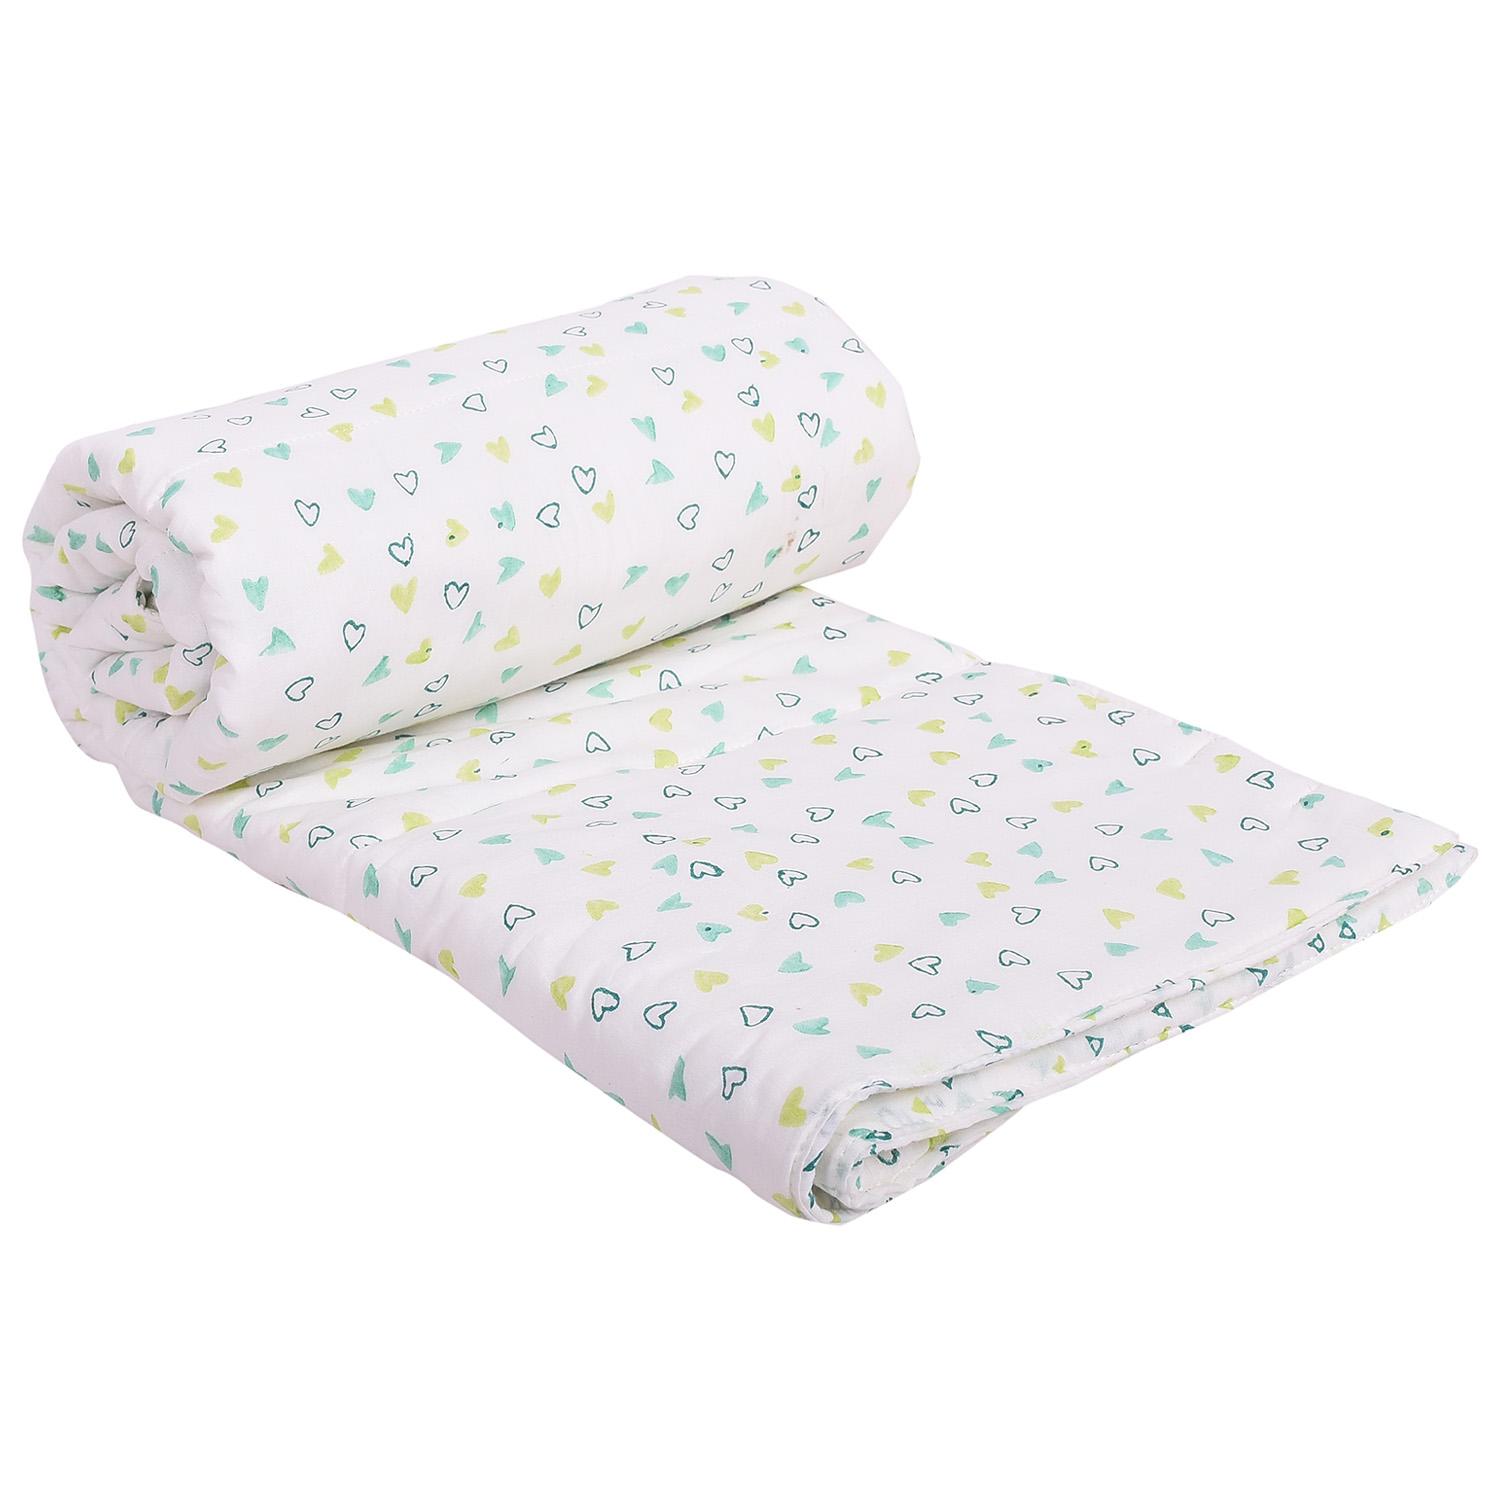 Baby AC Quilt blanket- 0-3 Year-100x120  and Organic Cotton Muslin Sleeping cum carrying Nest Bag- 0-11 Months - Green Heart